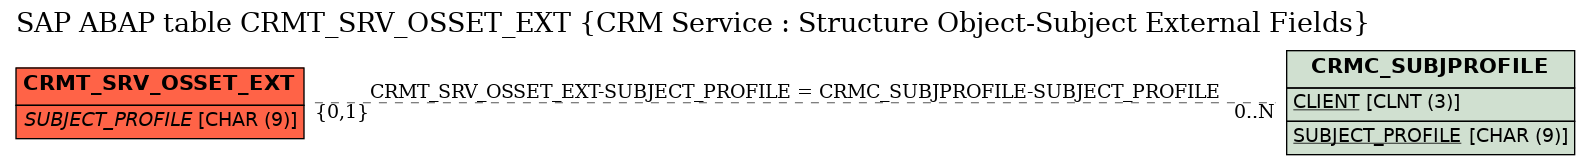 E-R Diagram for table CRMT_SRV_OSSET_EXT (CRM Service : Structure Object-Subject External Fields)